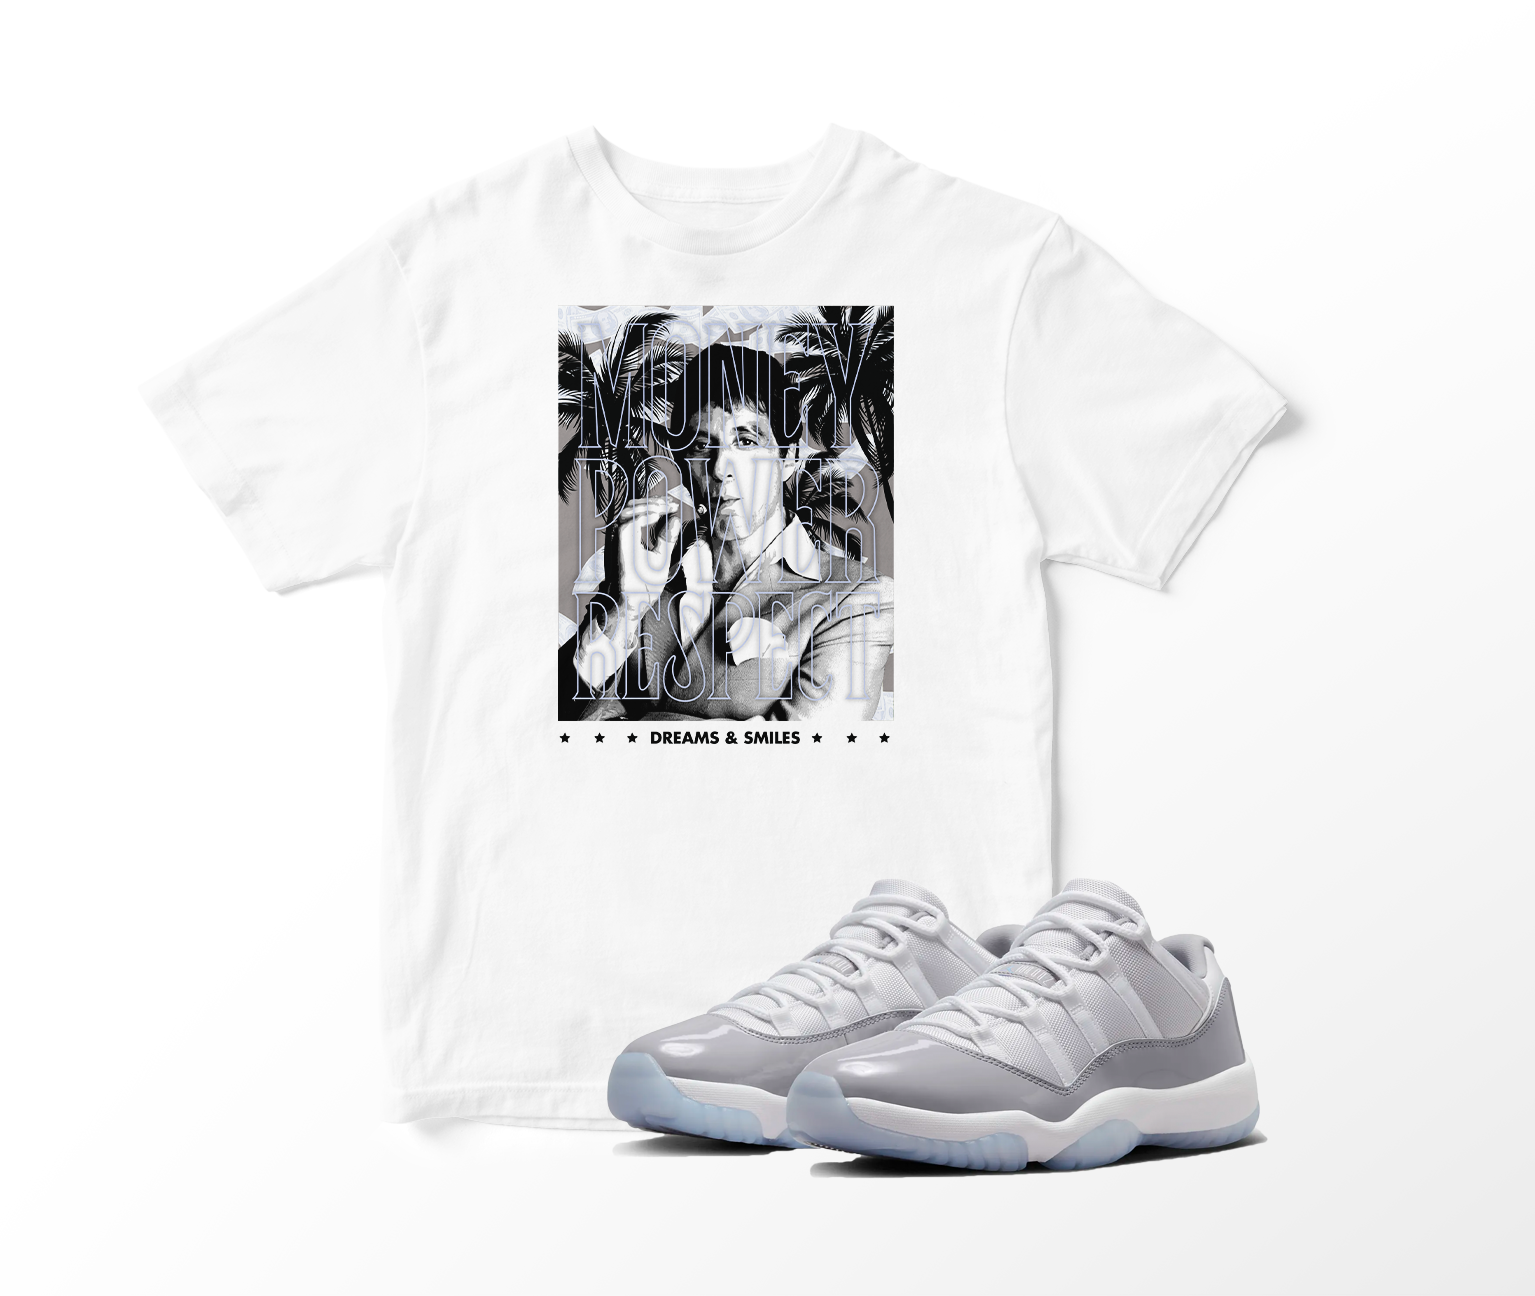 'Money, Power, Respect' Custom Graphic Short Sleeve T-Shirt To Match Air Jordan 11 Low Cool Grey